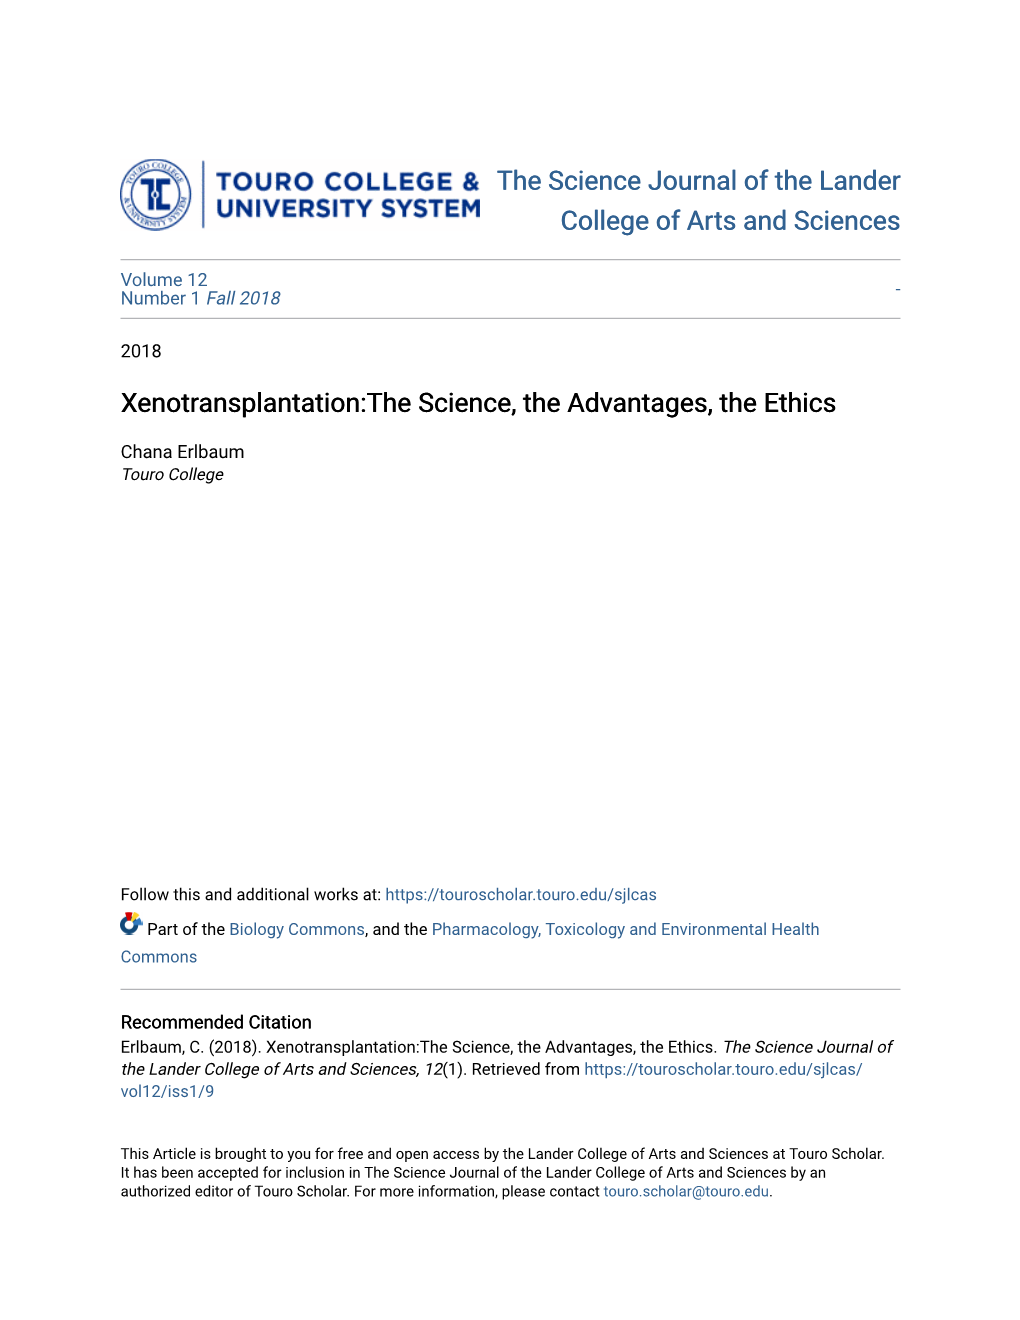 Xenotransplantation:The Science, the Advantages, the Ethics